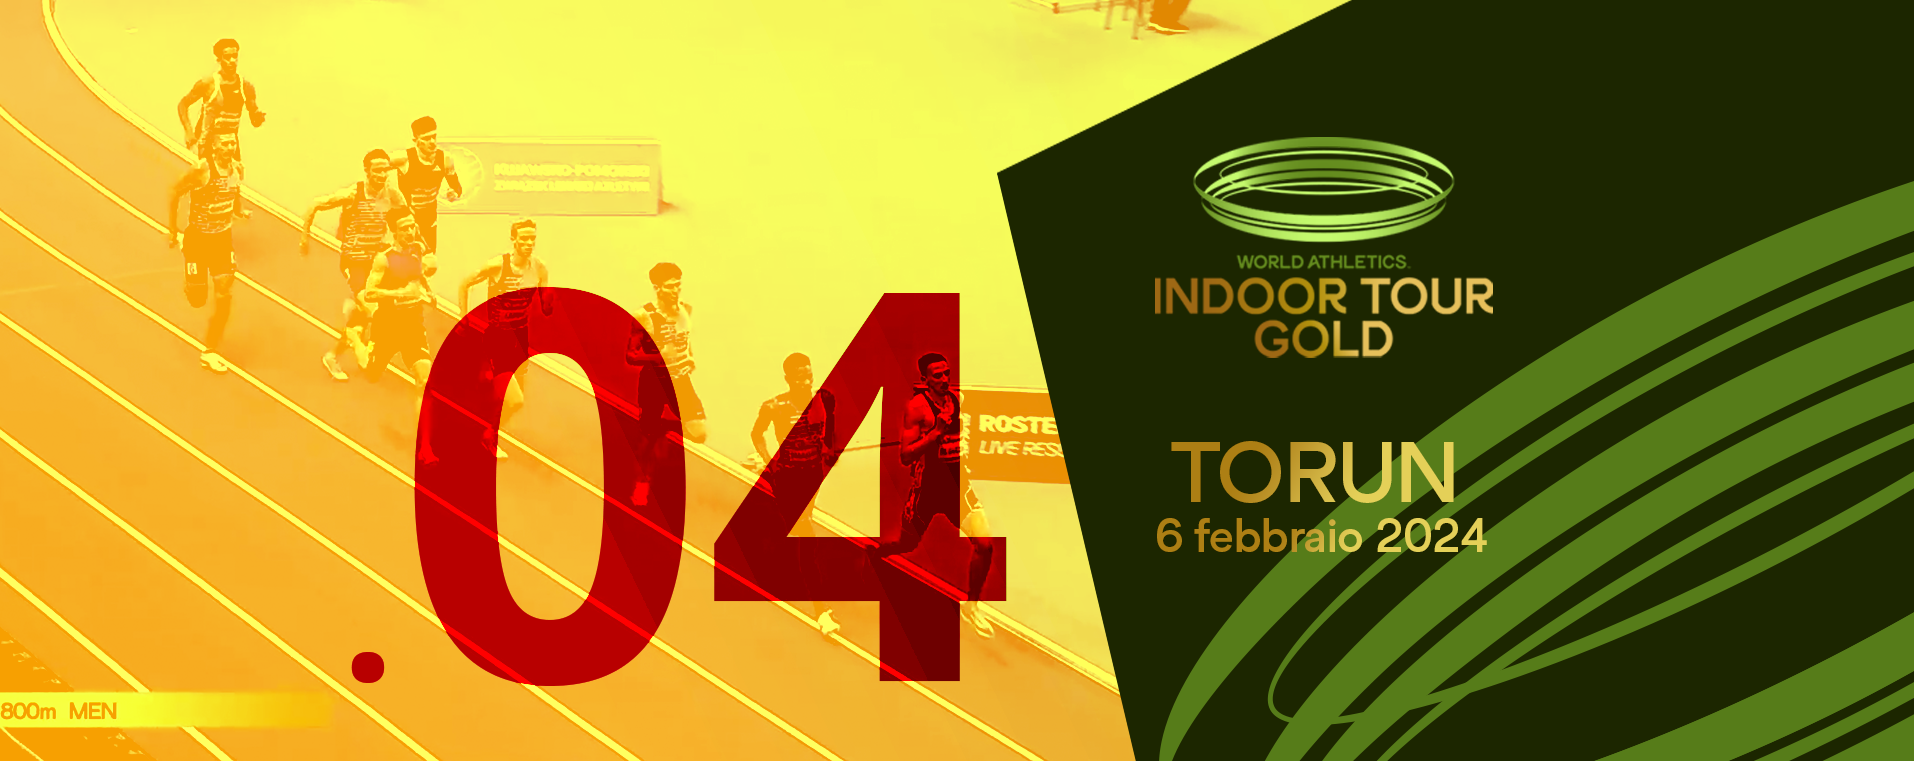  World Athletics Gold Indoor Tour Toruń